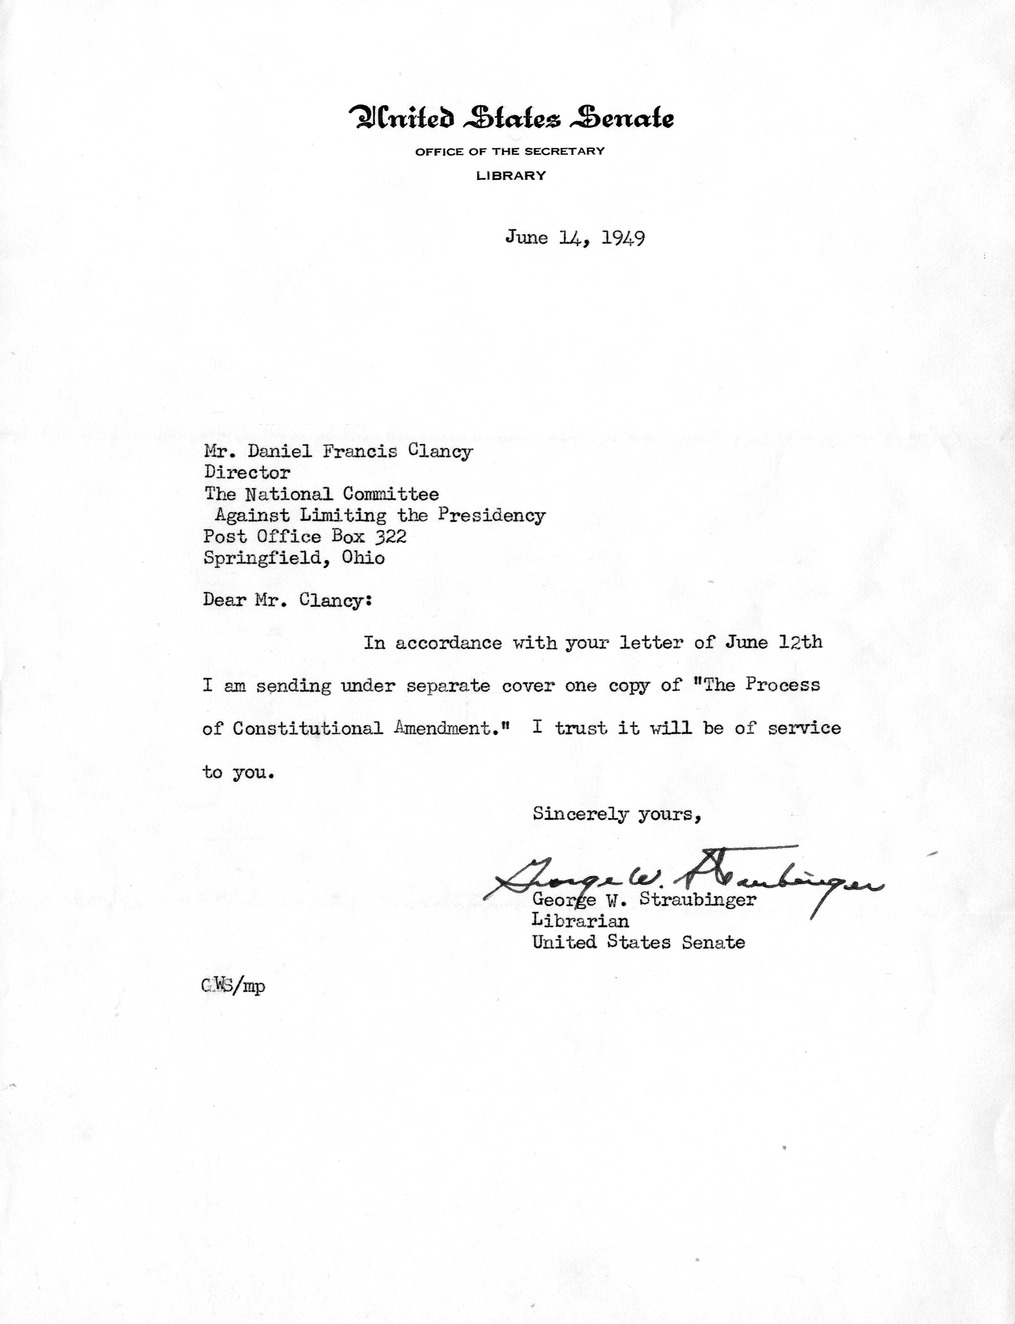 Letter from George W. Straubinger to Daniel F. Clancy